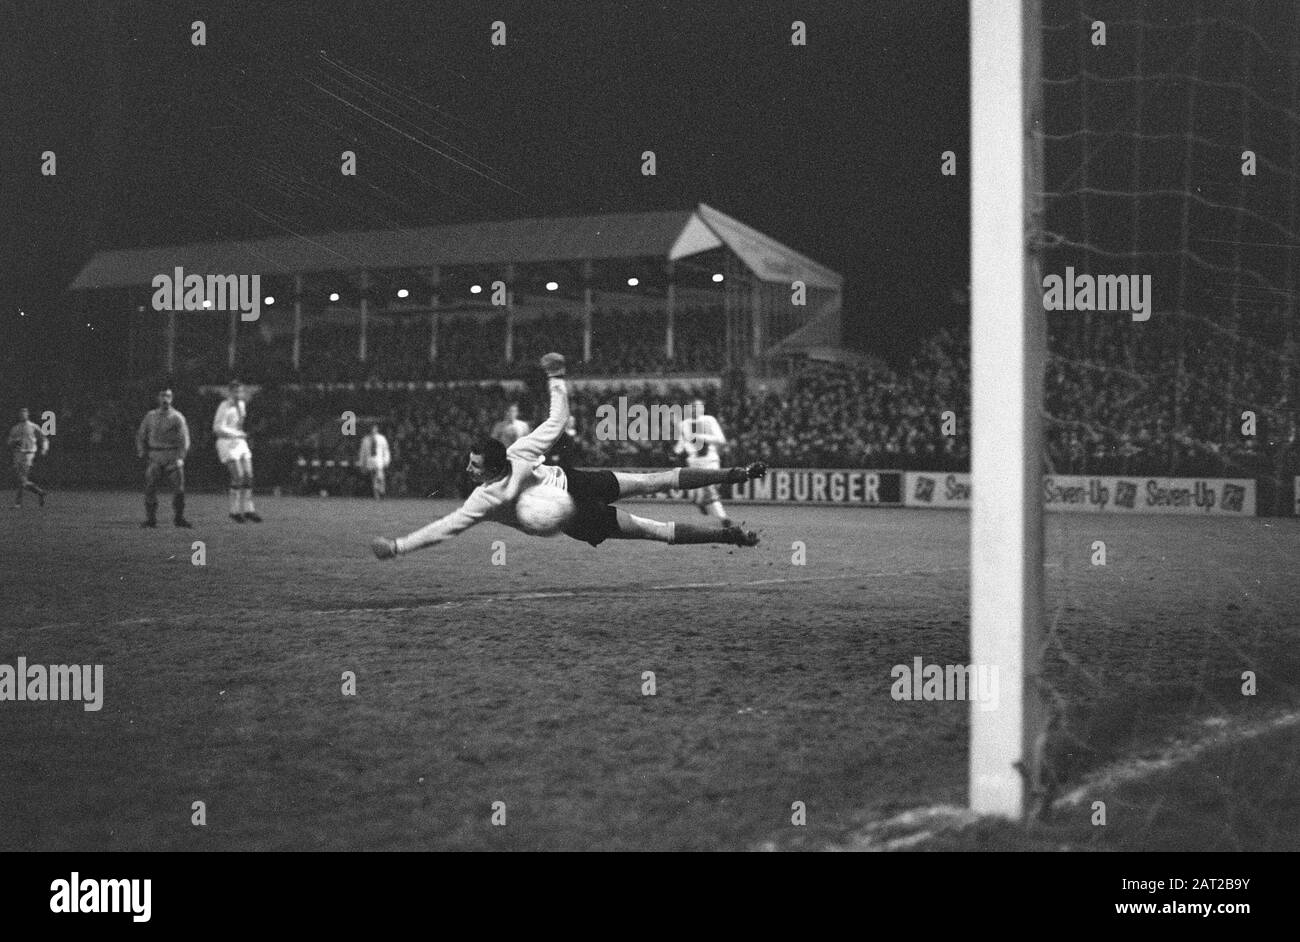 Fortuna Sittard Combination against Ajax 0-1.Goalkeeper Bird is passed Date: 25 January 1969 Location: Geleen Keywords: sport, football Institution name: AJAX Stock Photo